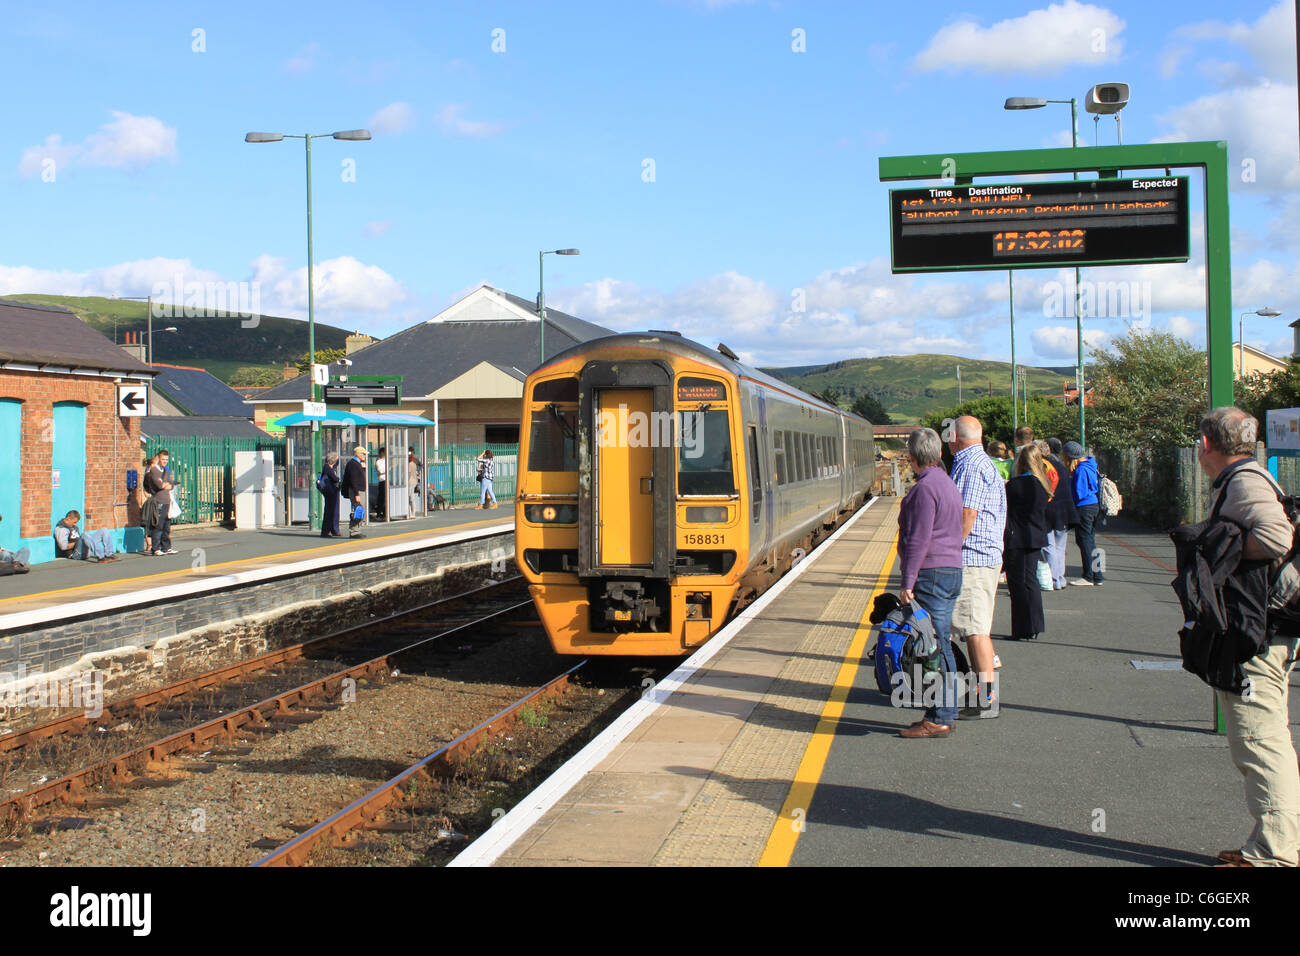 Class 158 dmu passenger train on the Cambrian coast line for Pwllheli arriving at Tywyn in Gwynedd, Wales on 9th August 2011.. Stock Photo